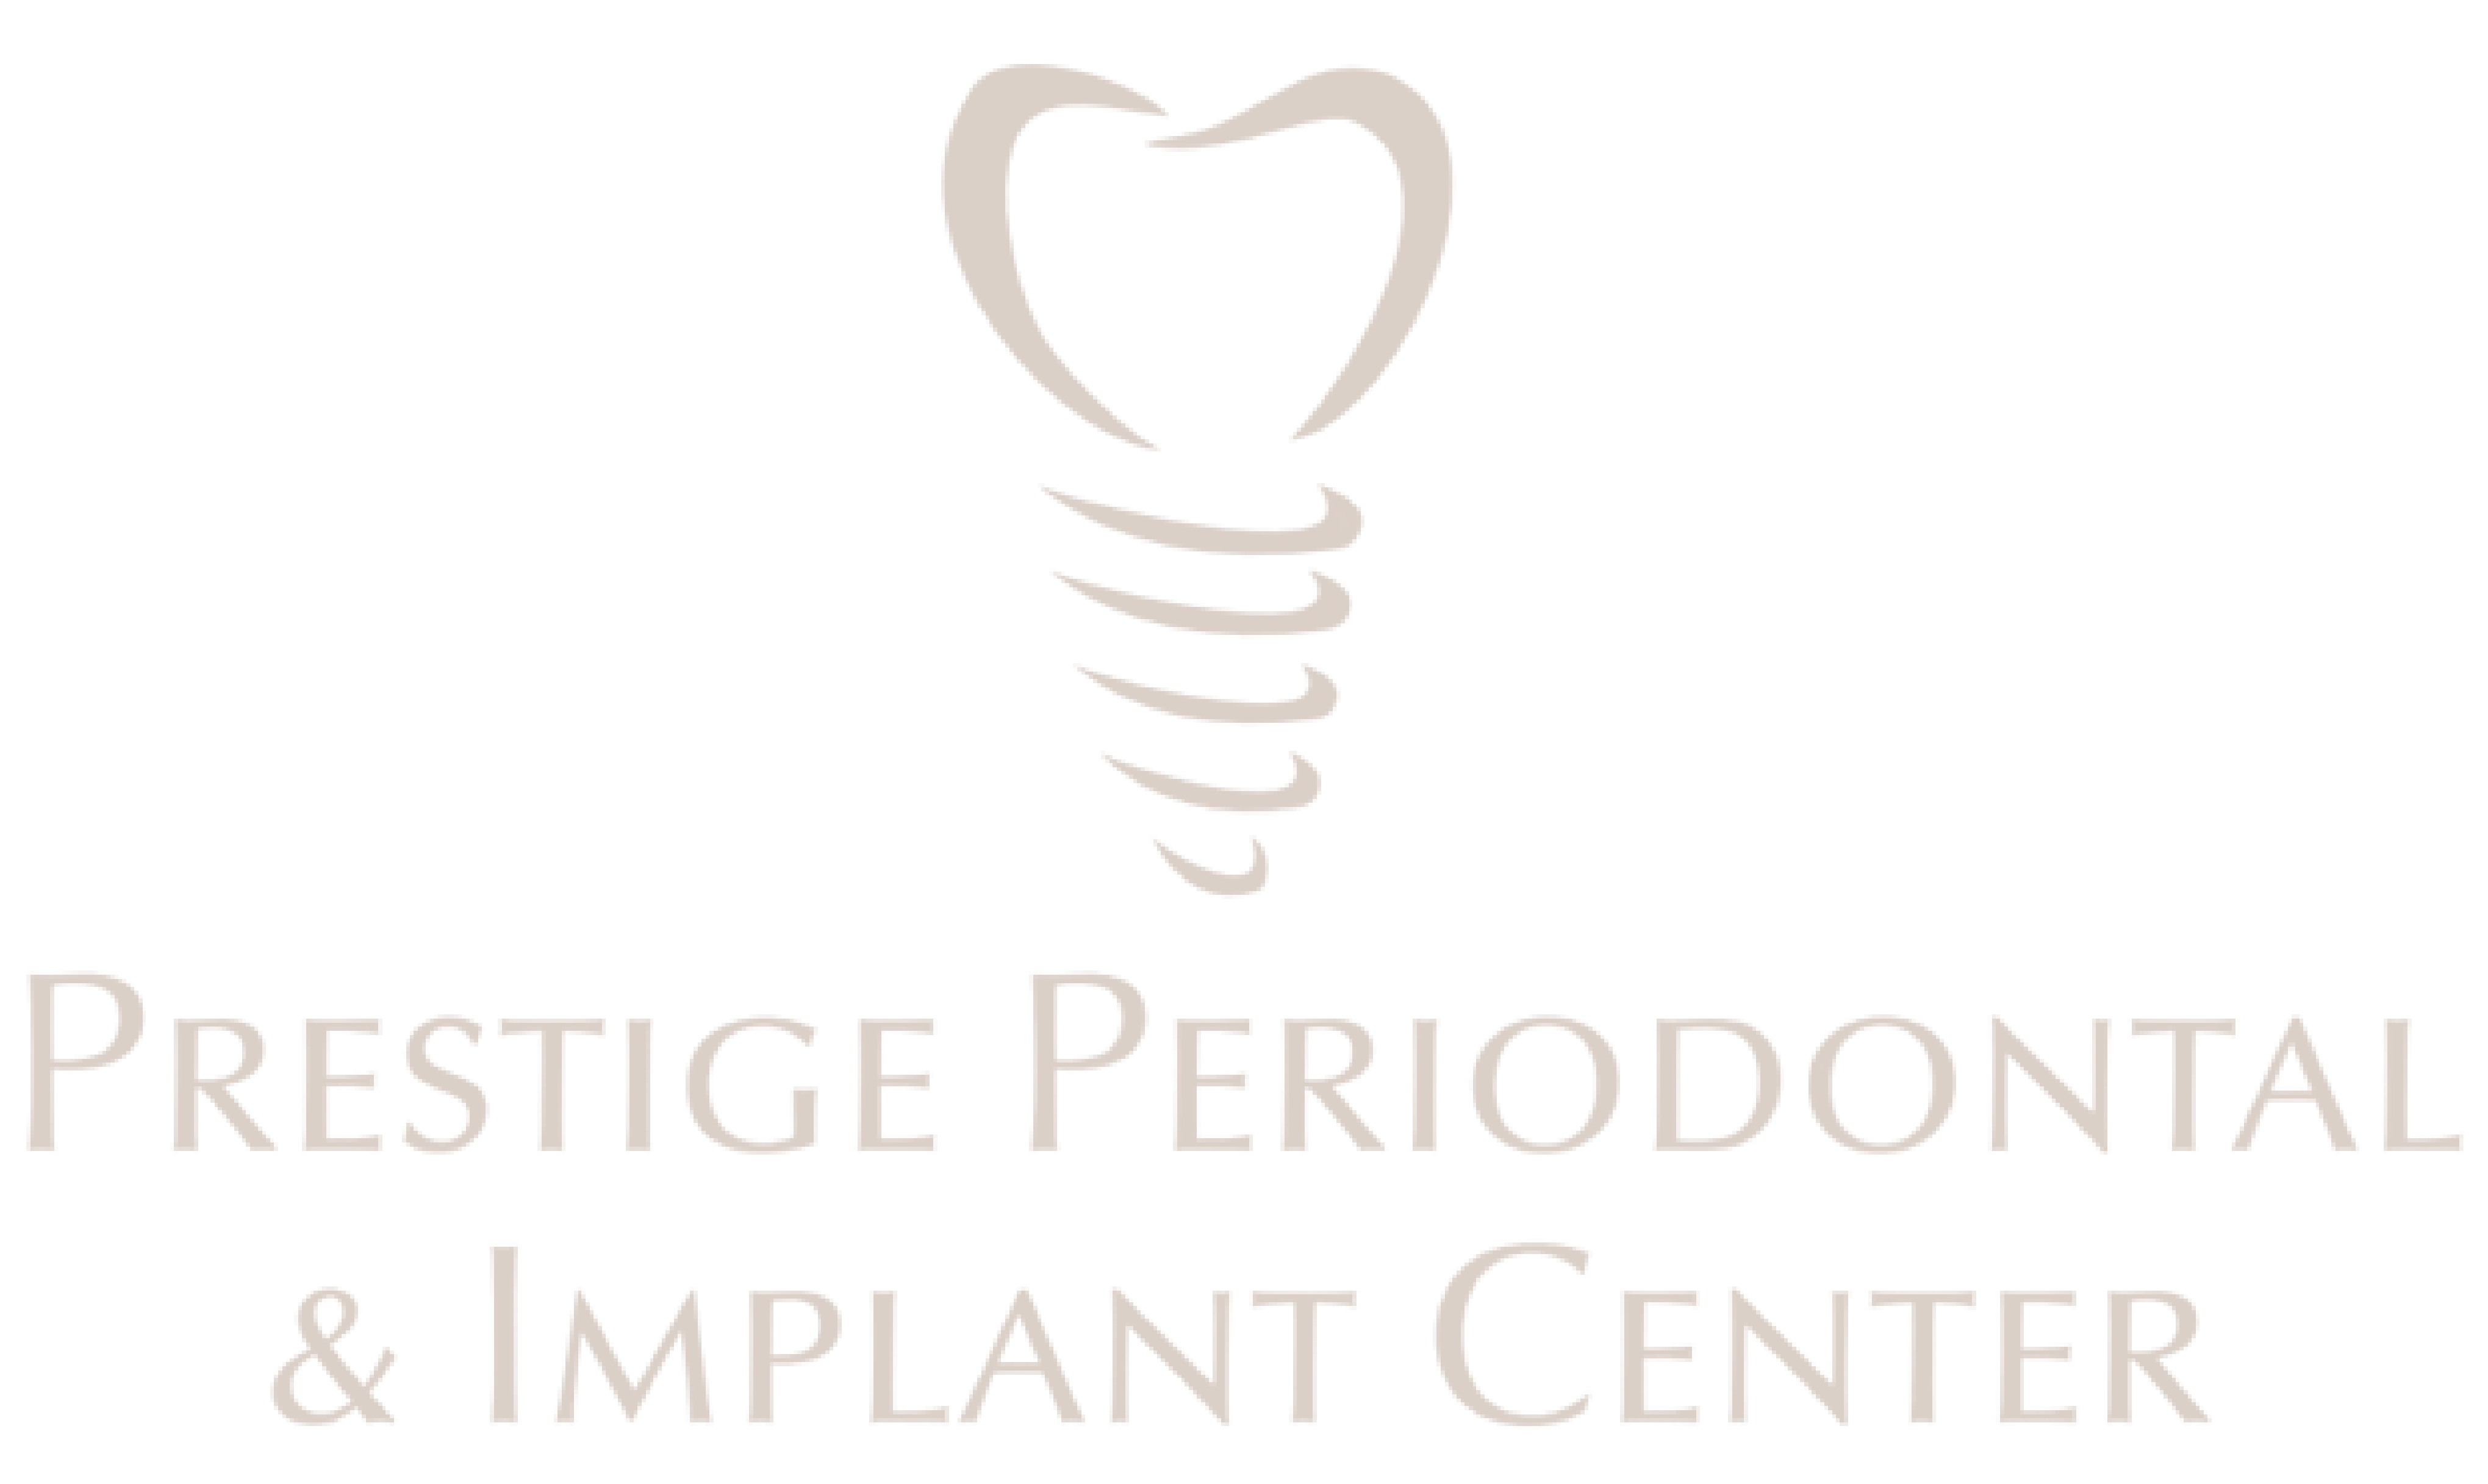 Prestige Periodontal & Implant Center